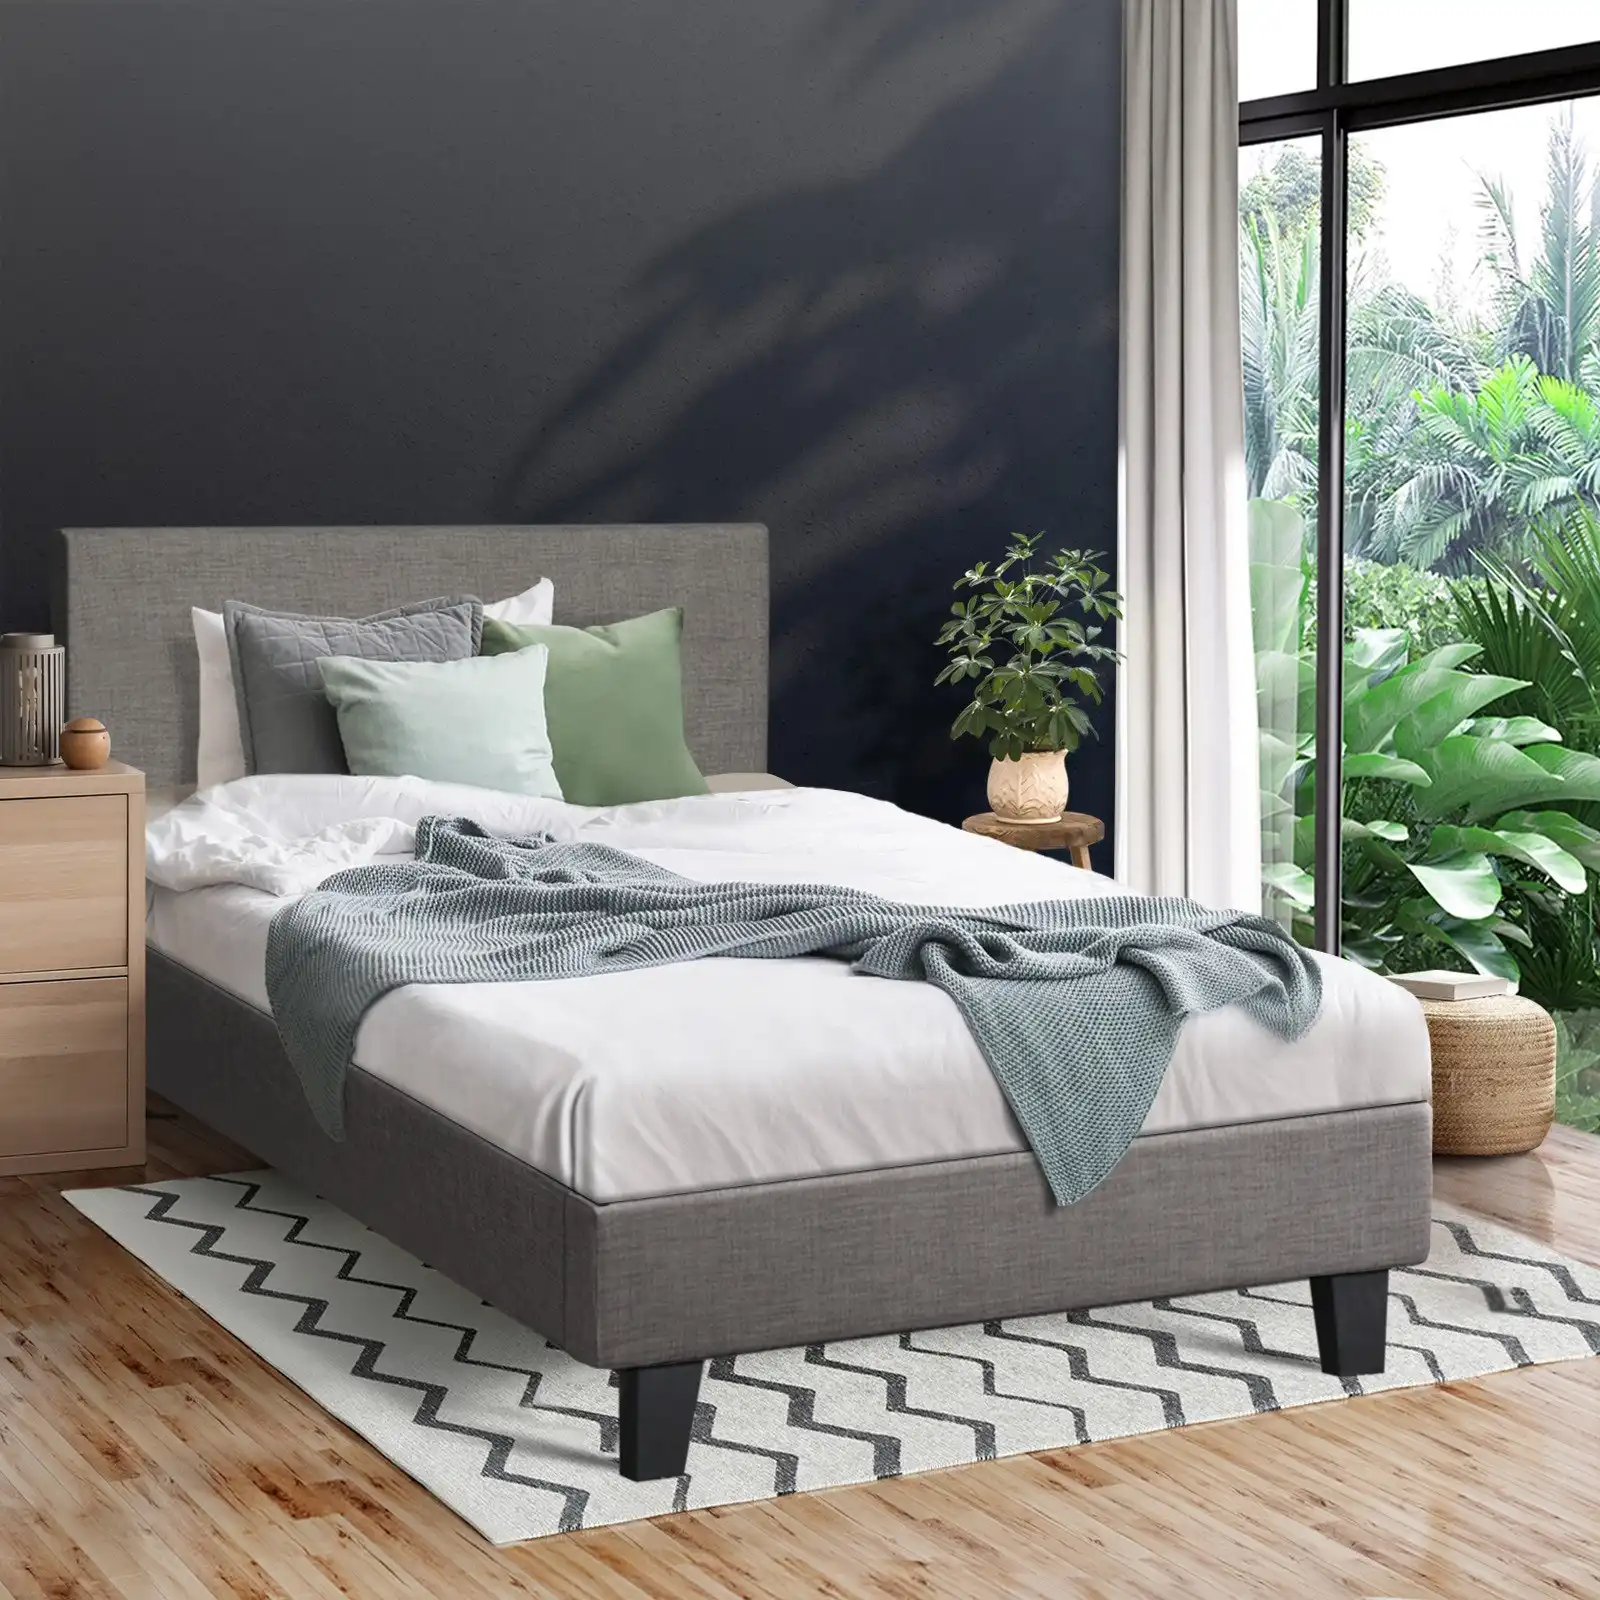 Oikiture Bed Frame King Single Size Mattress Base Platform Wooden Slats Fabric